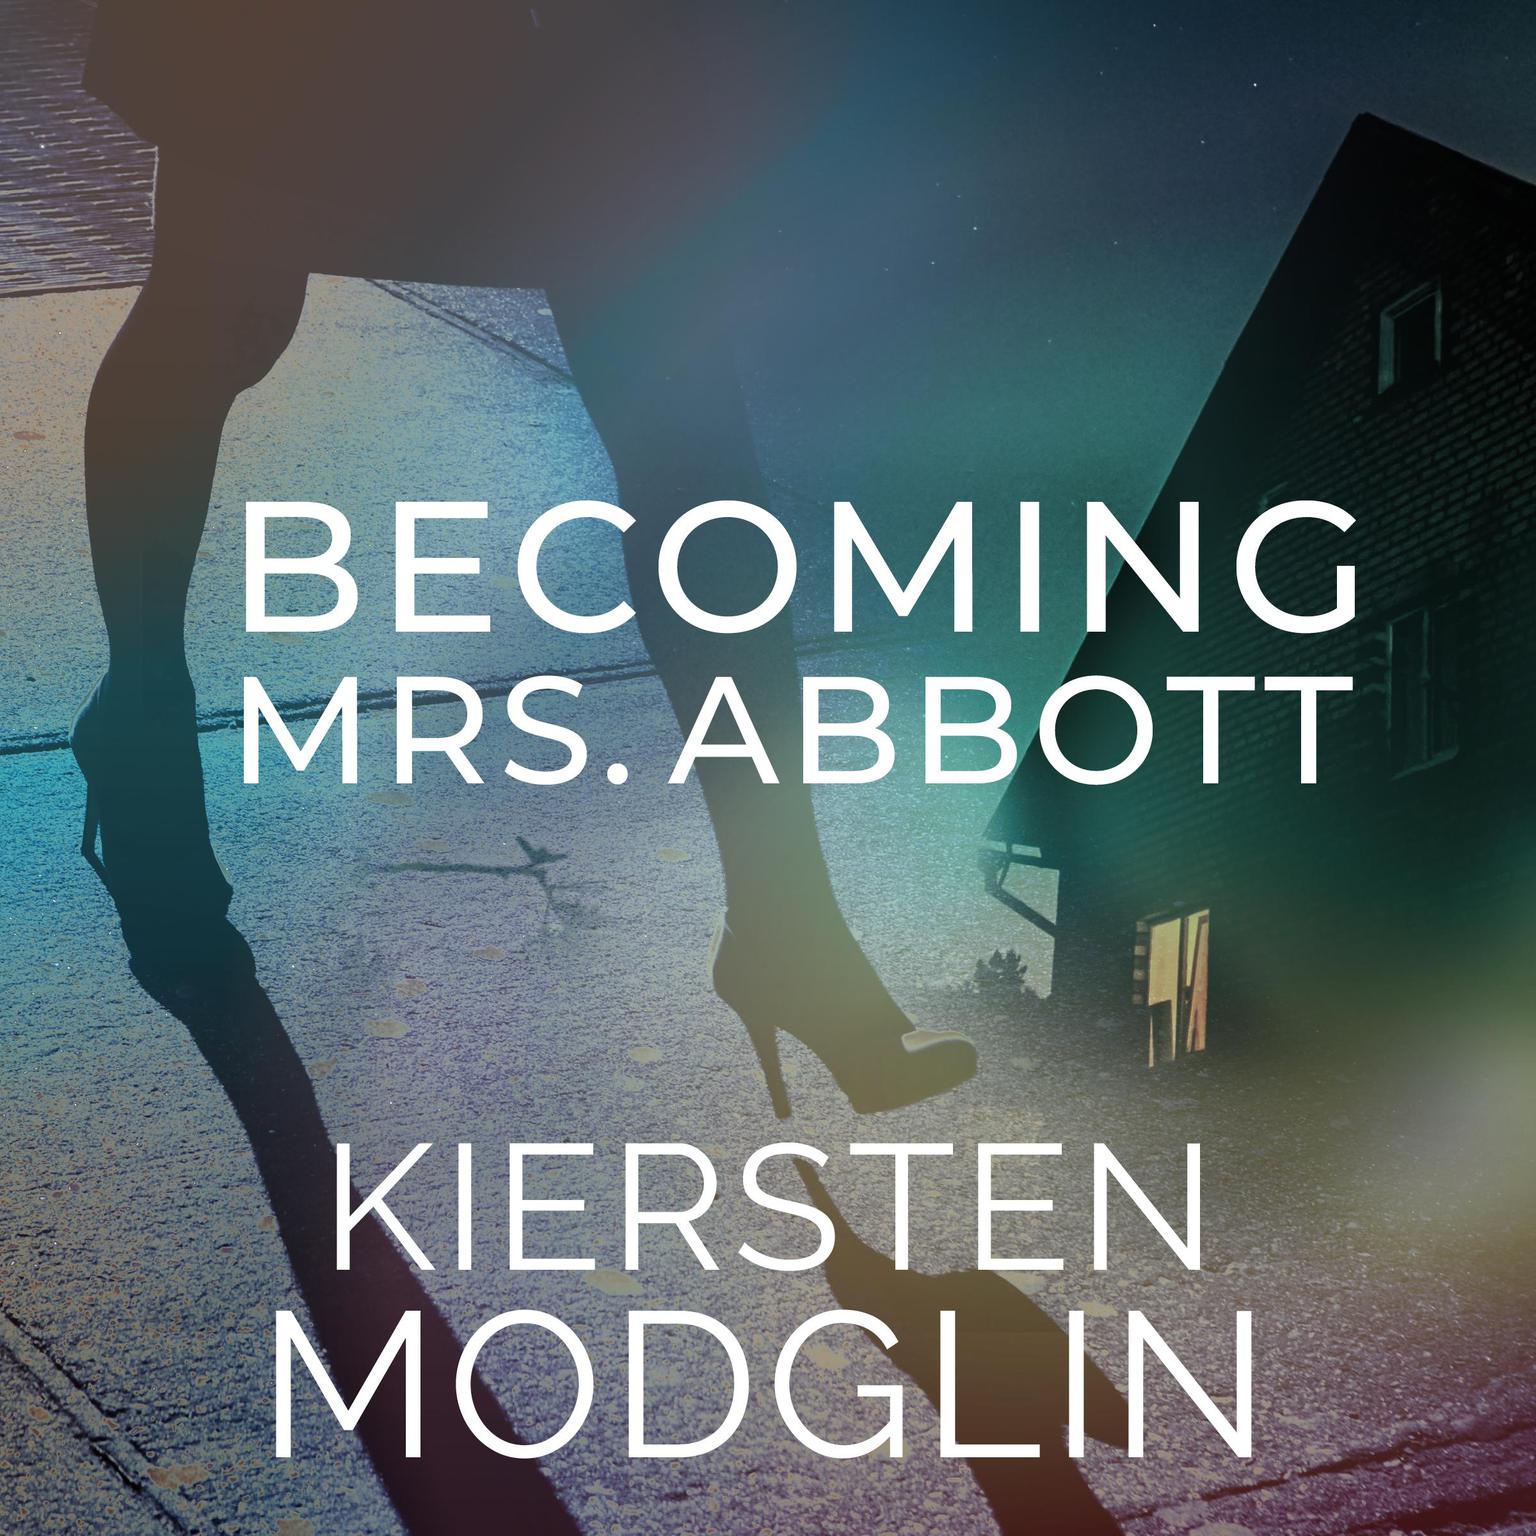 Becoming Mrs. Abbott Audiobook, by Kiersten Modglin